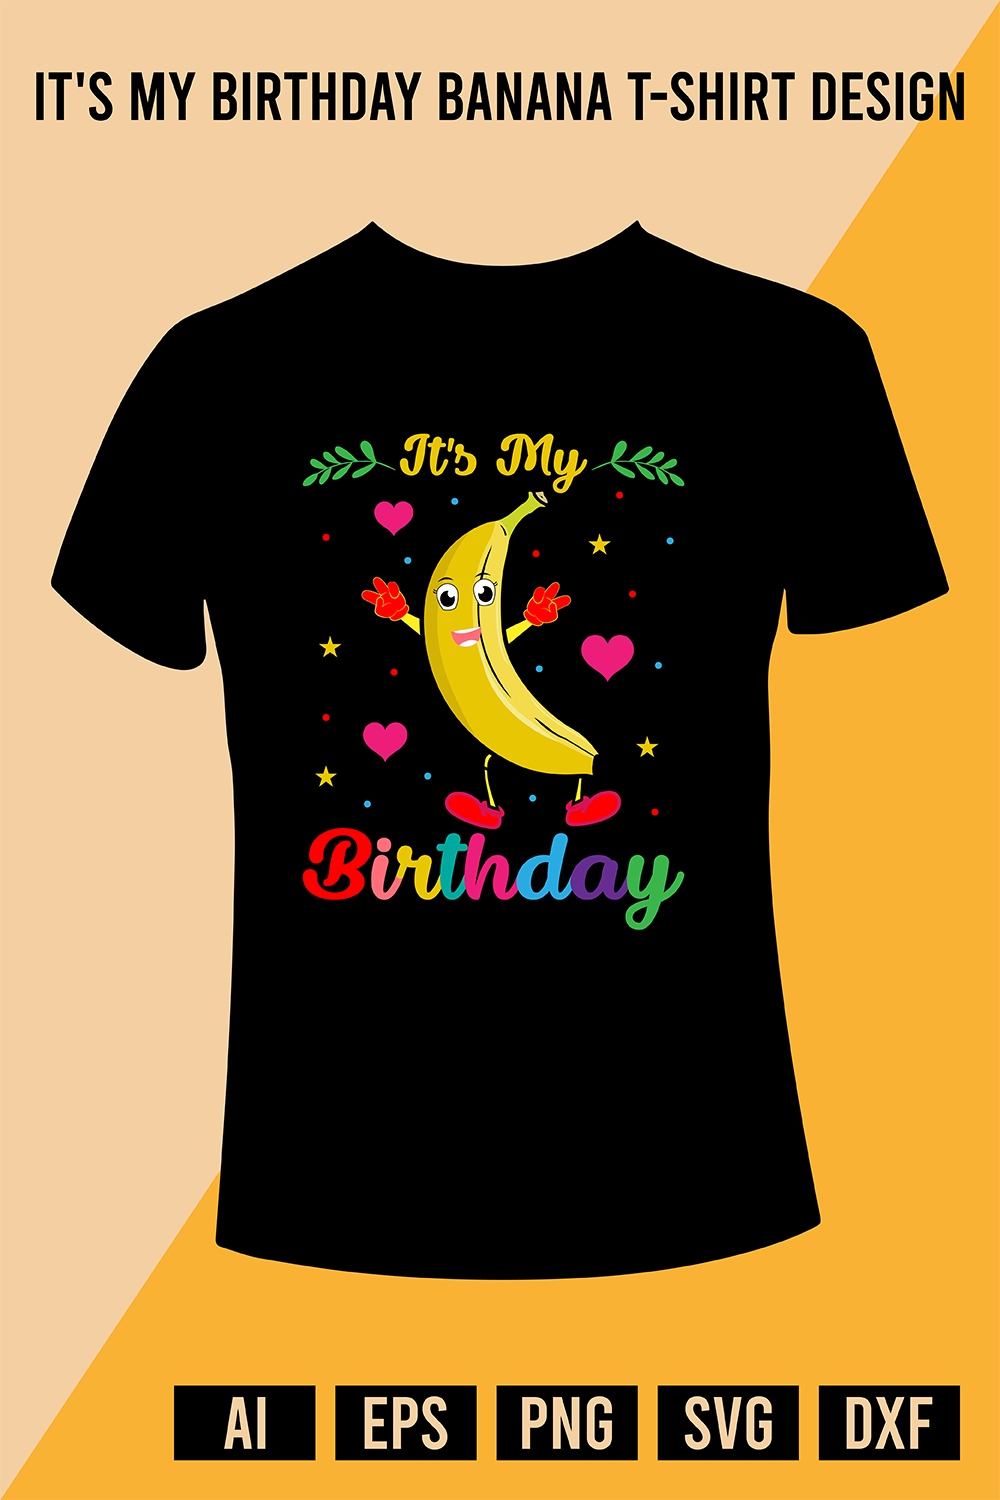 It's My Birthday Banana T-Shirt Design pinterest preview image.